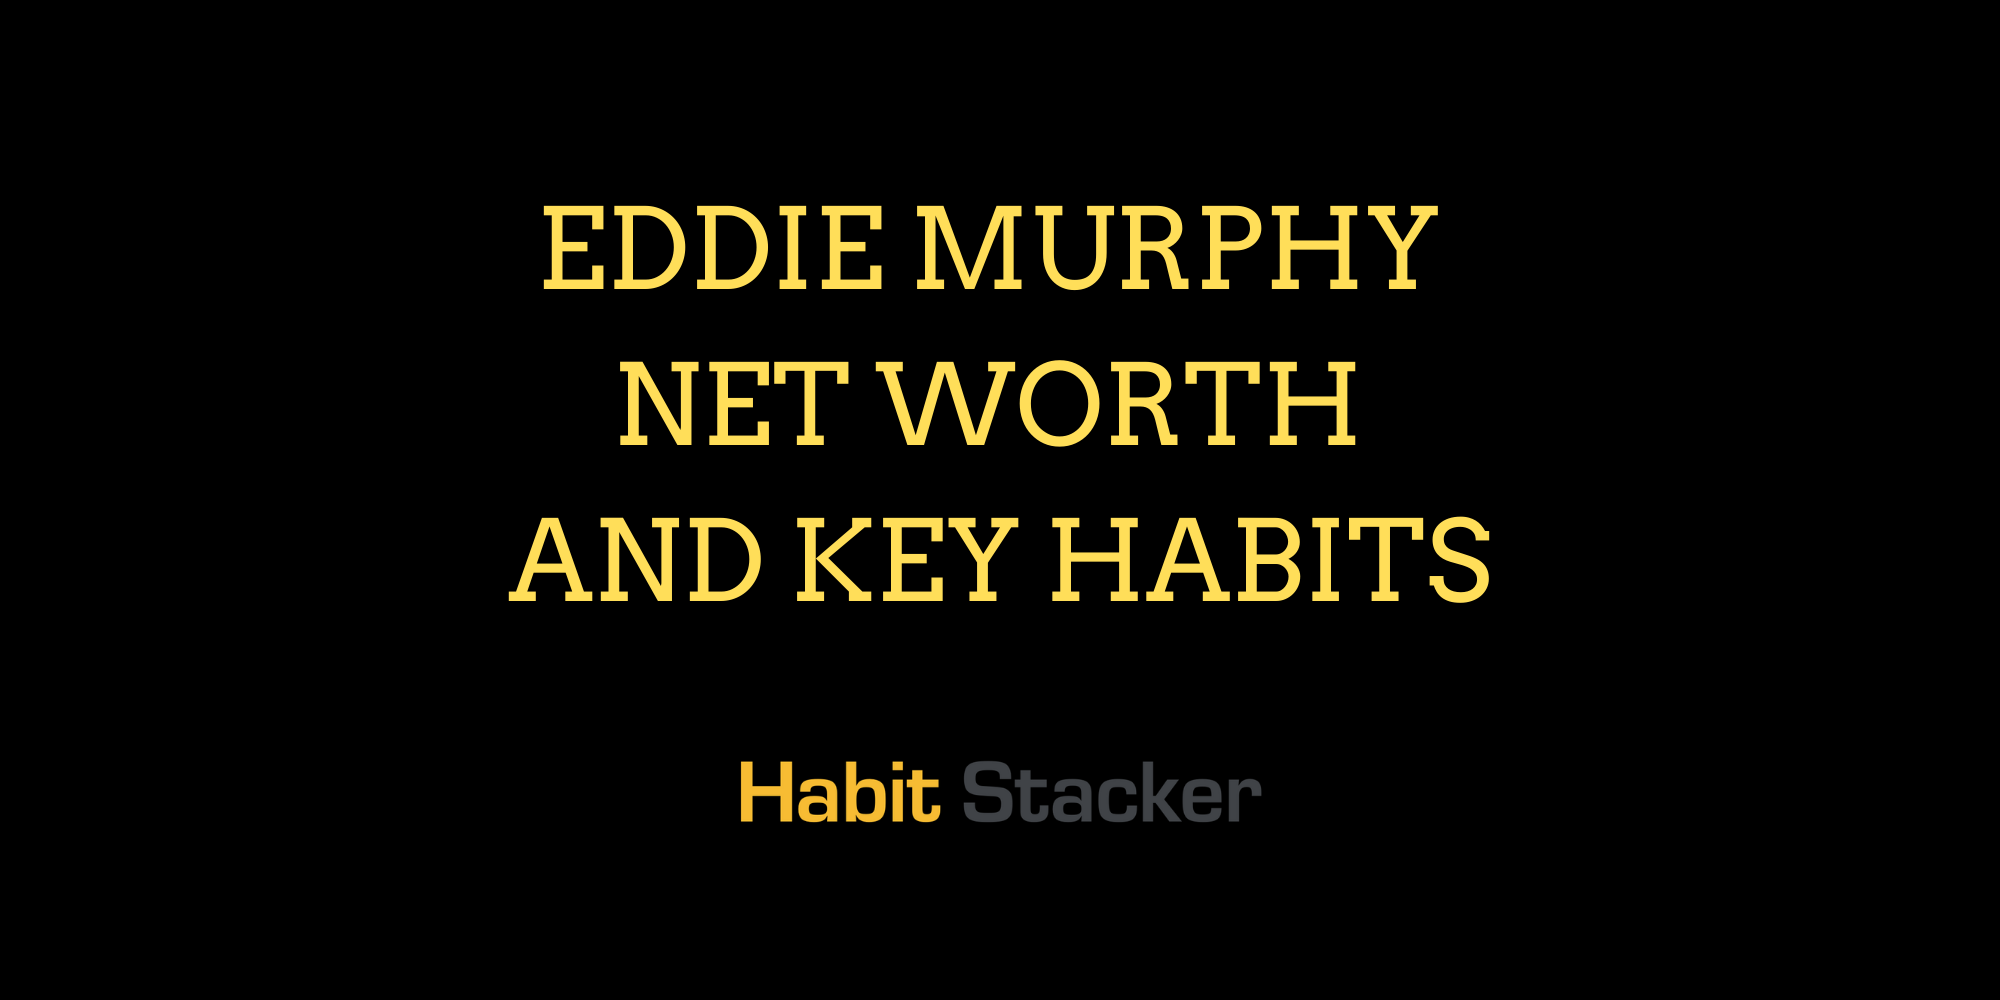 Eddie Murphy Net Worth and Key Habits